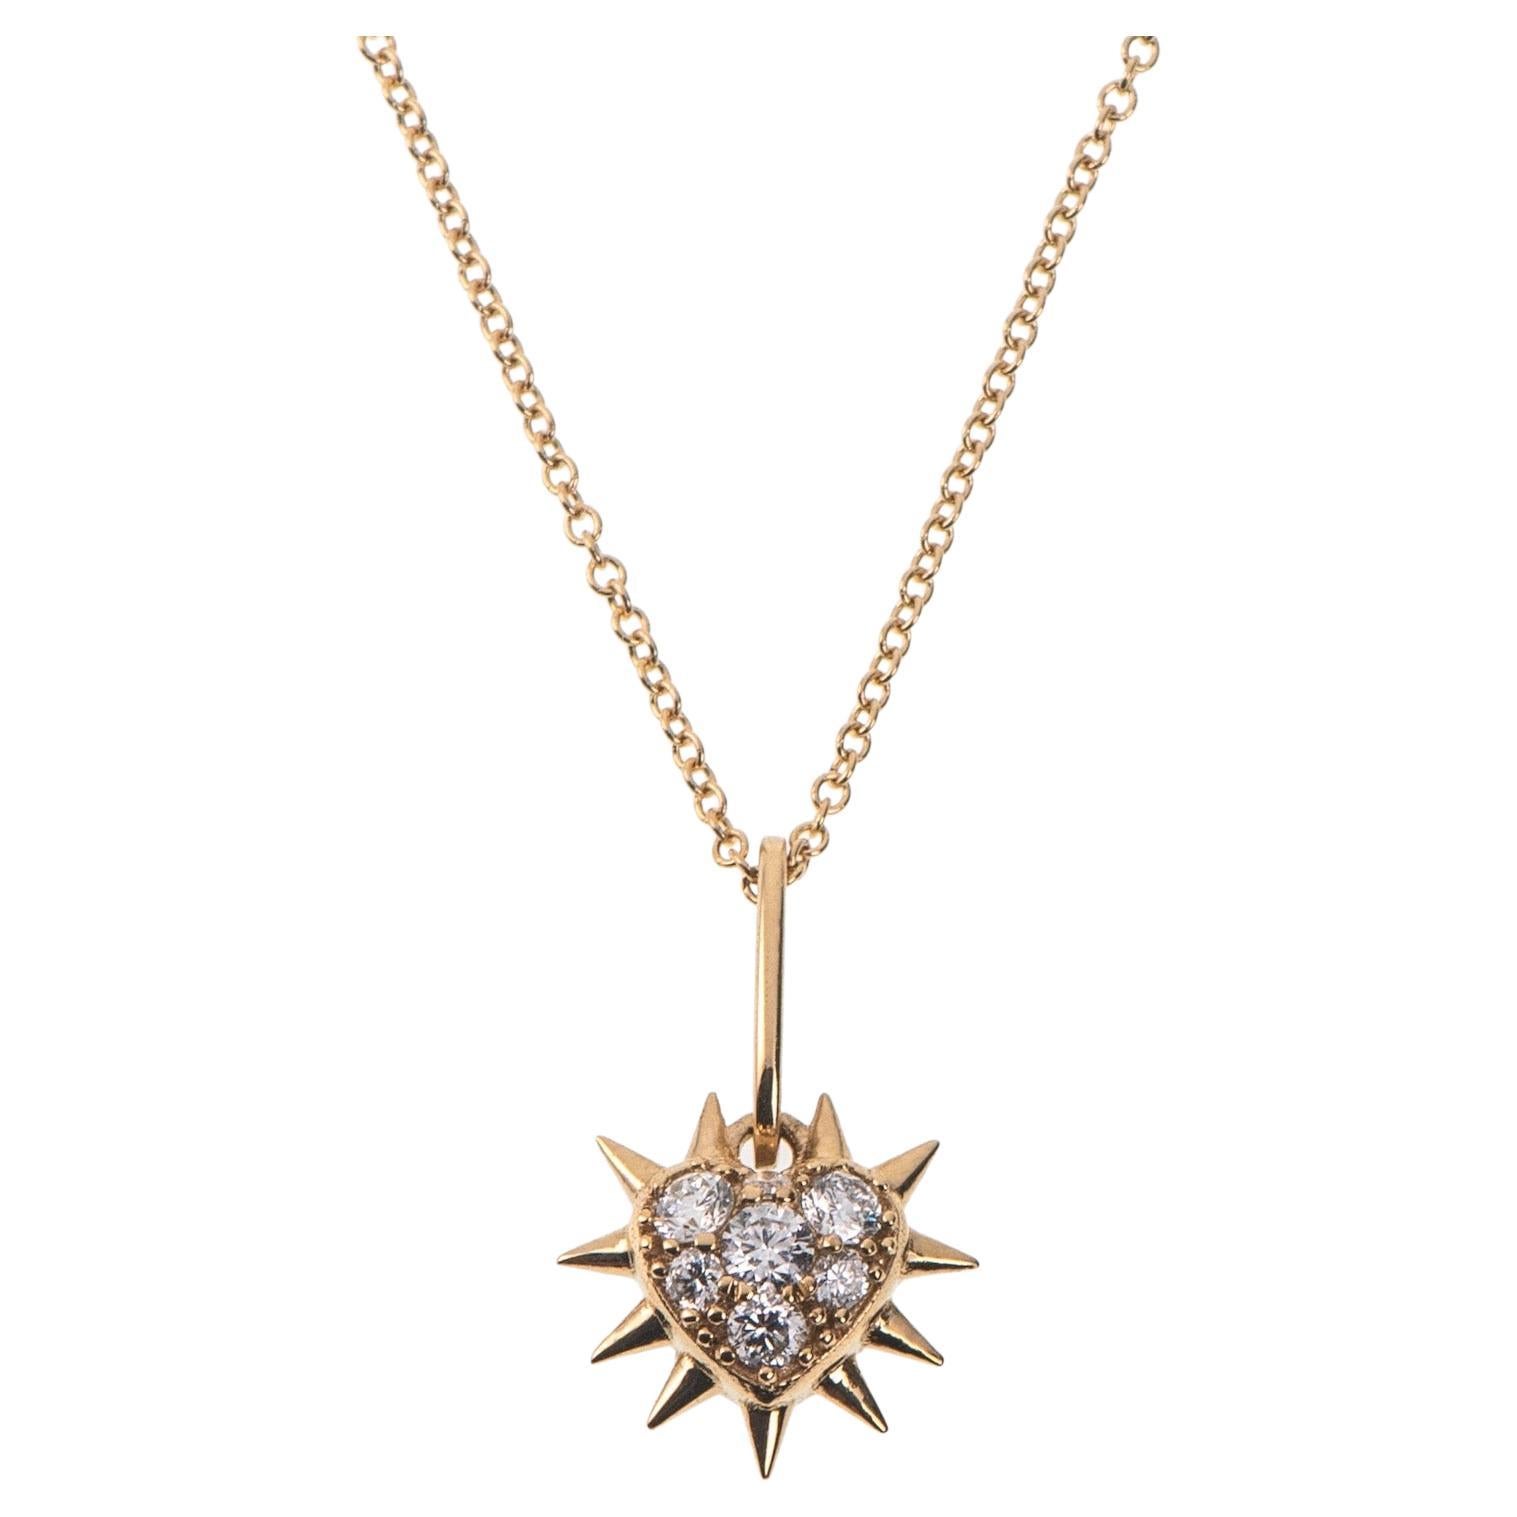 Maria Kotsoni Contemporary 18k Gold Thorny Heart White Diamond Pendant Necklace For Sale